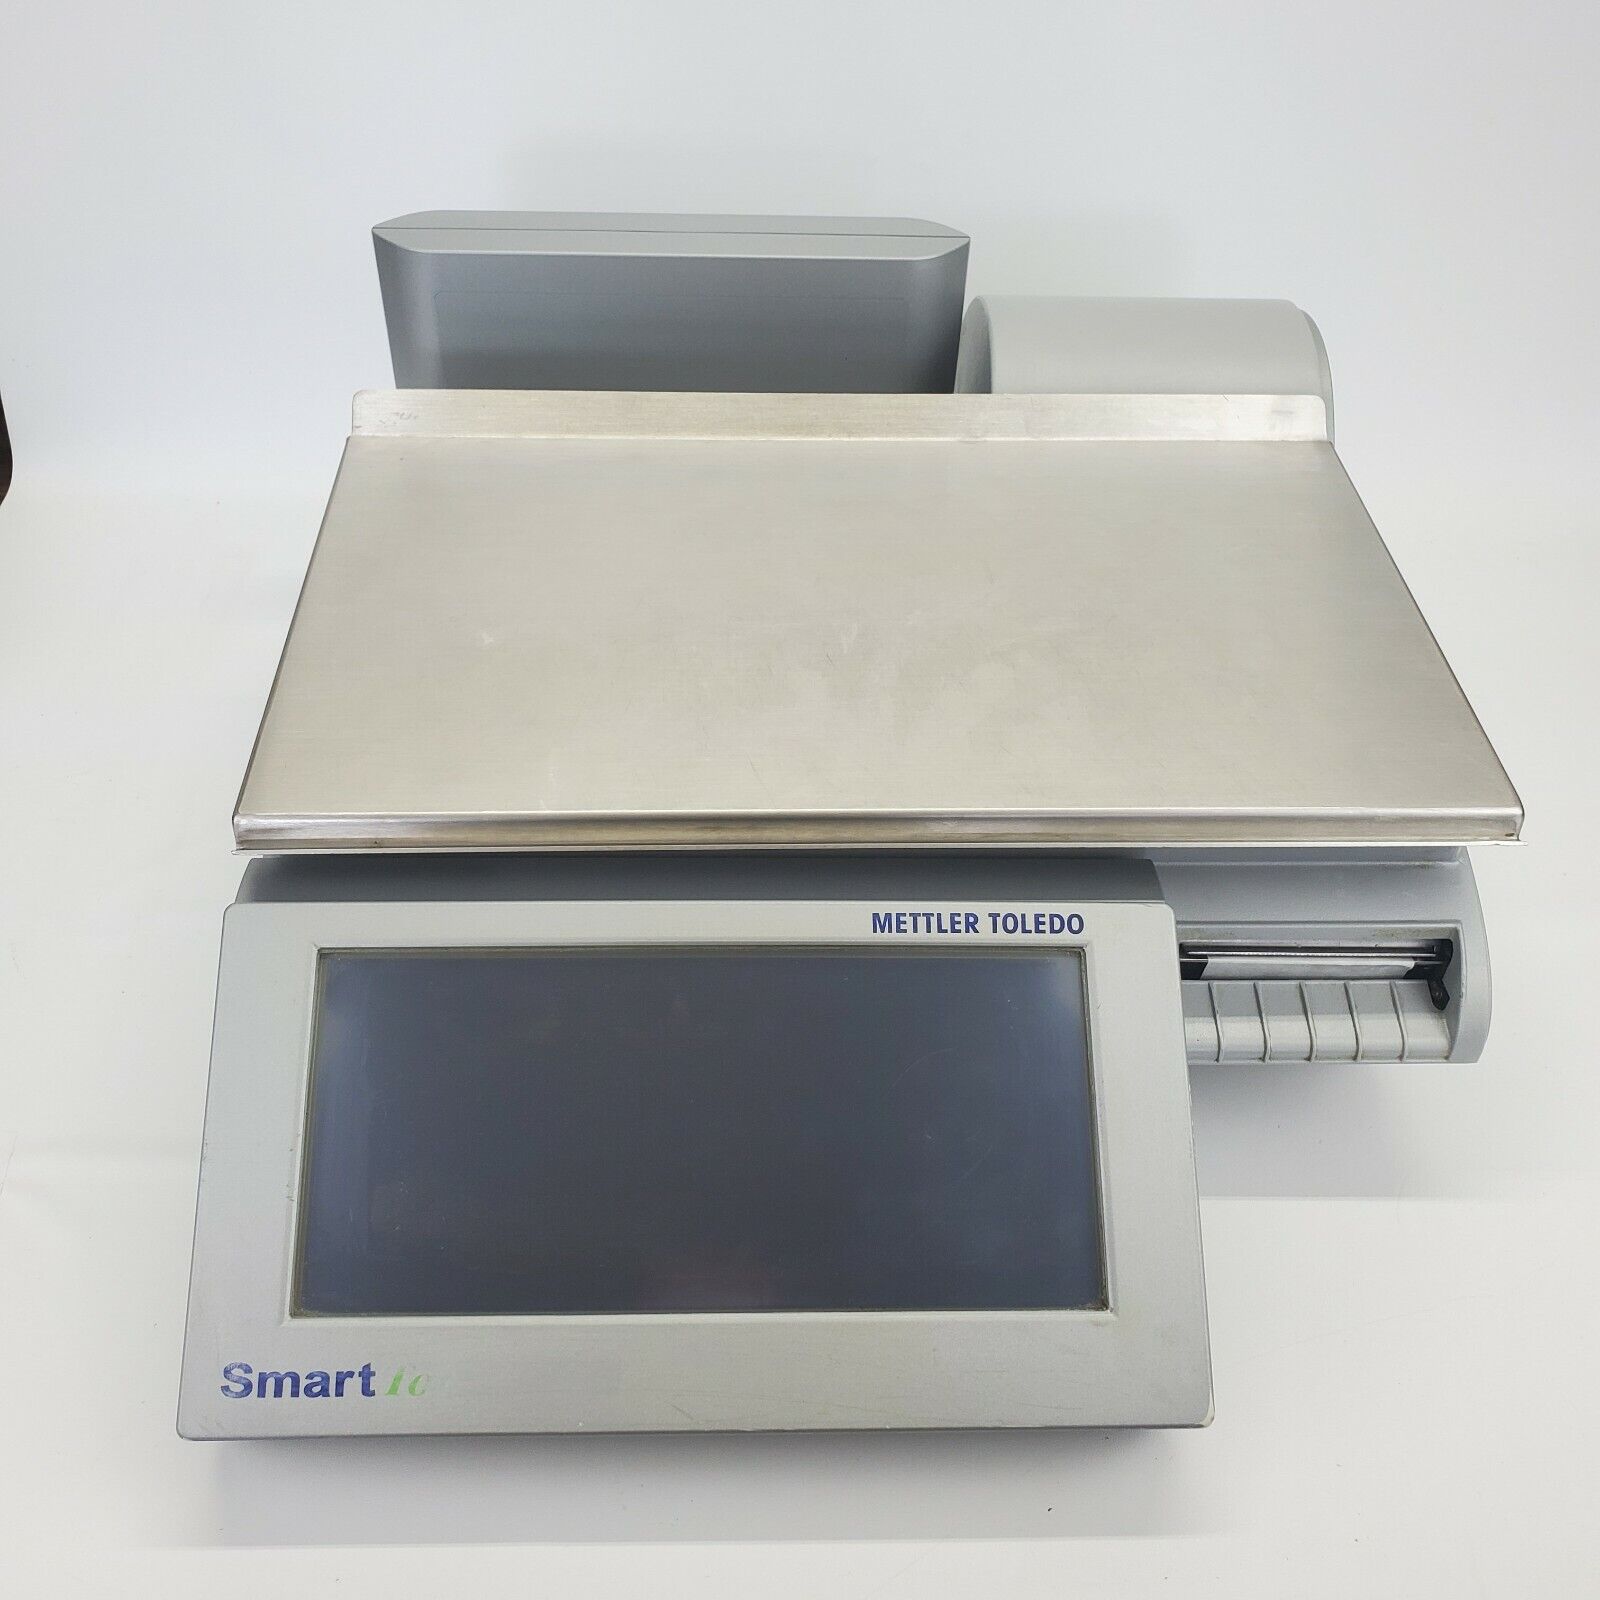 Mettler Toledo Sales Industry No. 1 for sale UC-ST Scale w ~ Touchscreen~Deli Bakery Printer